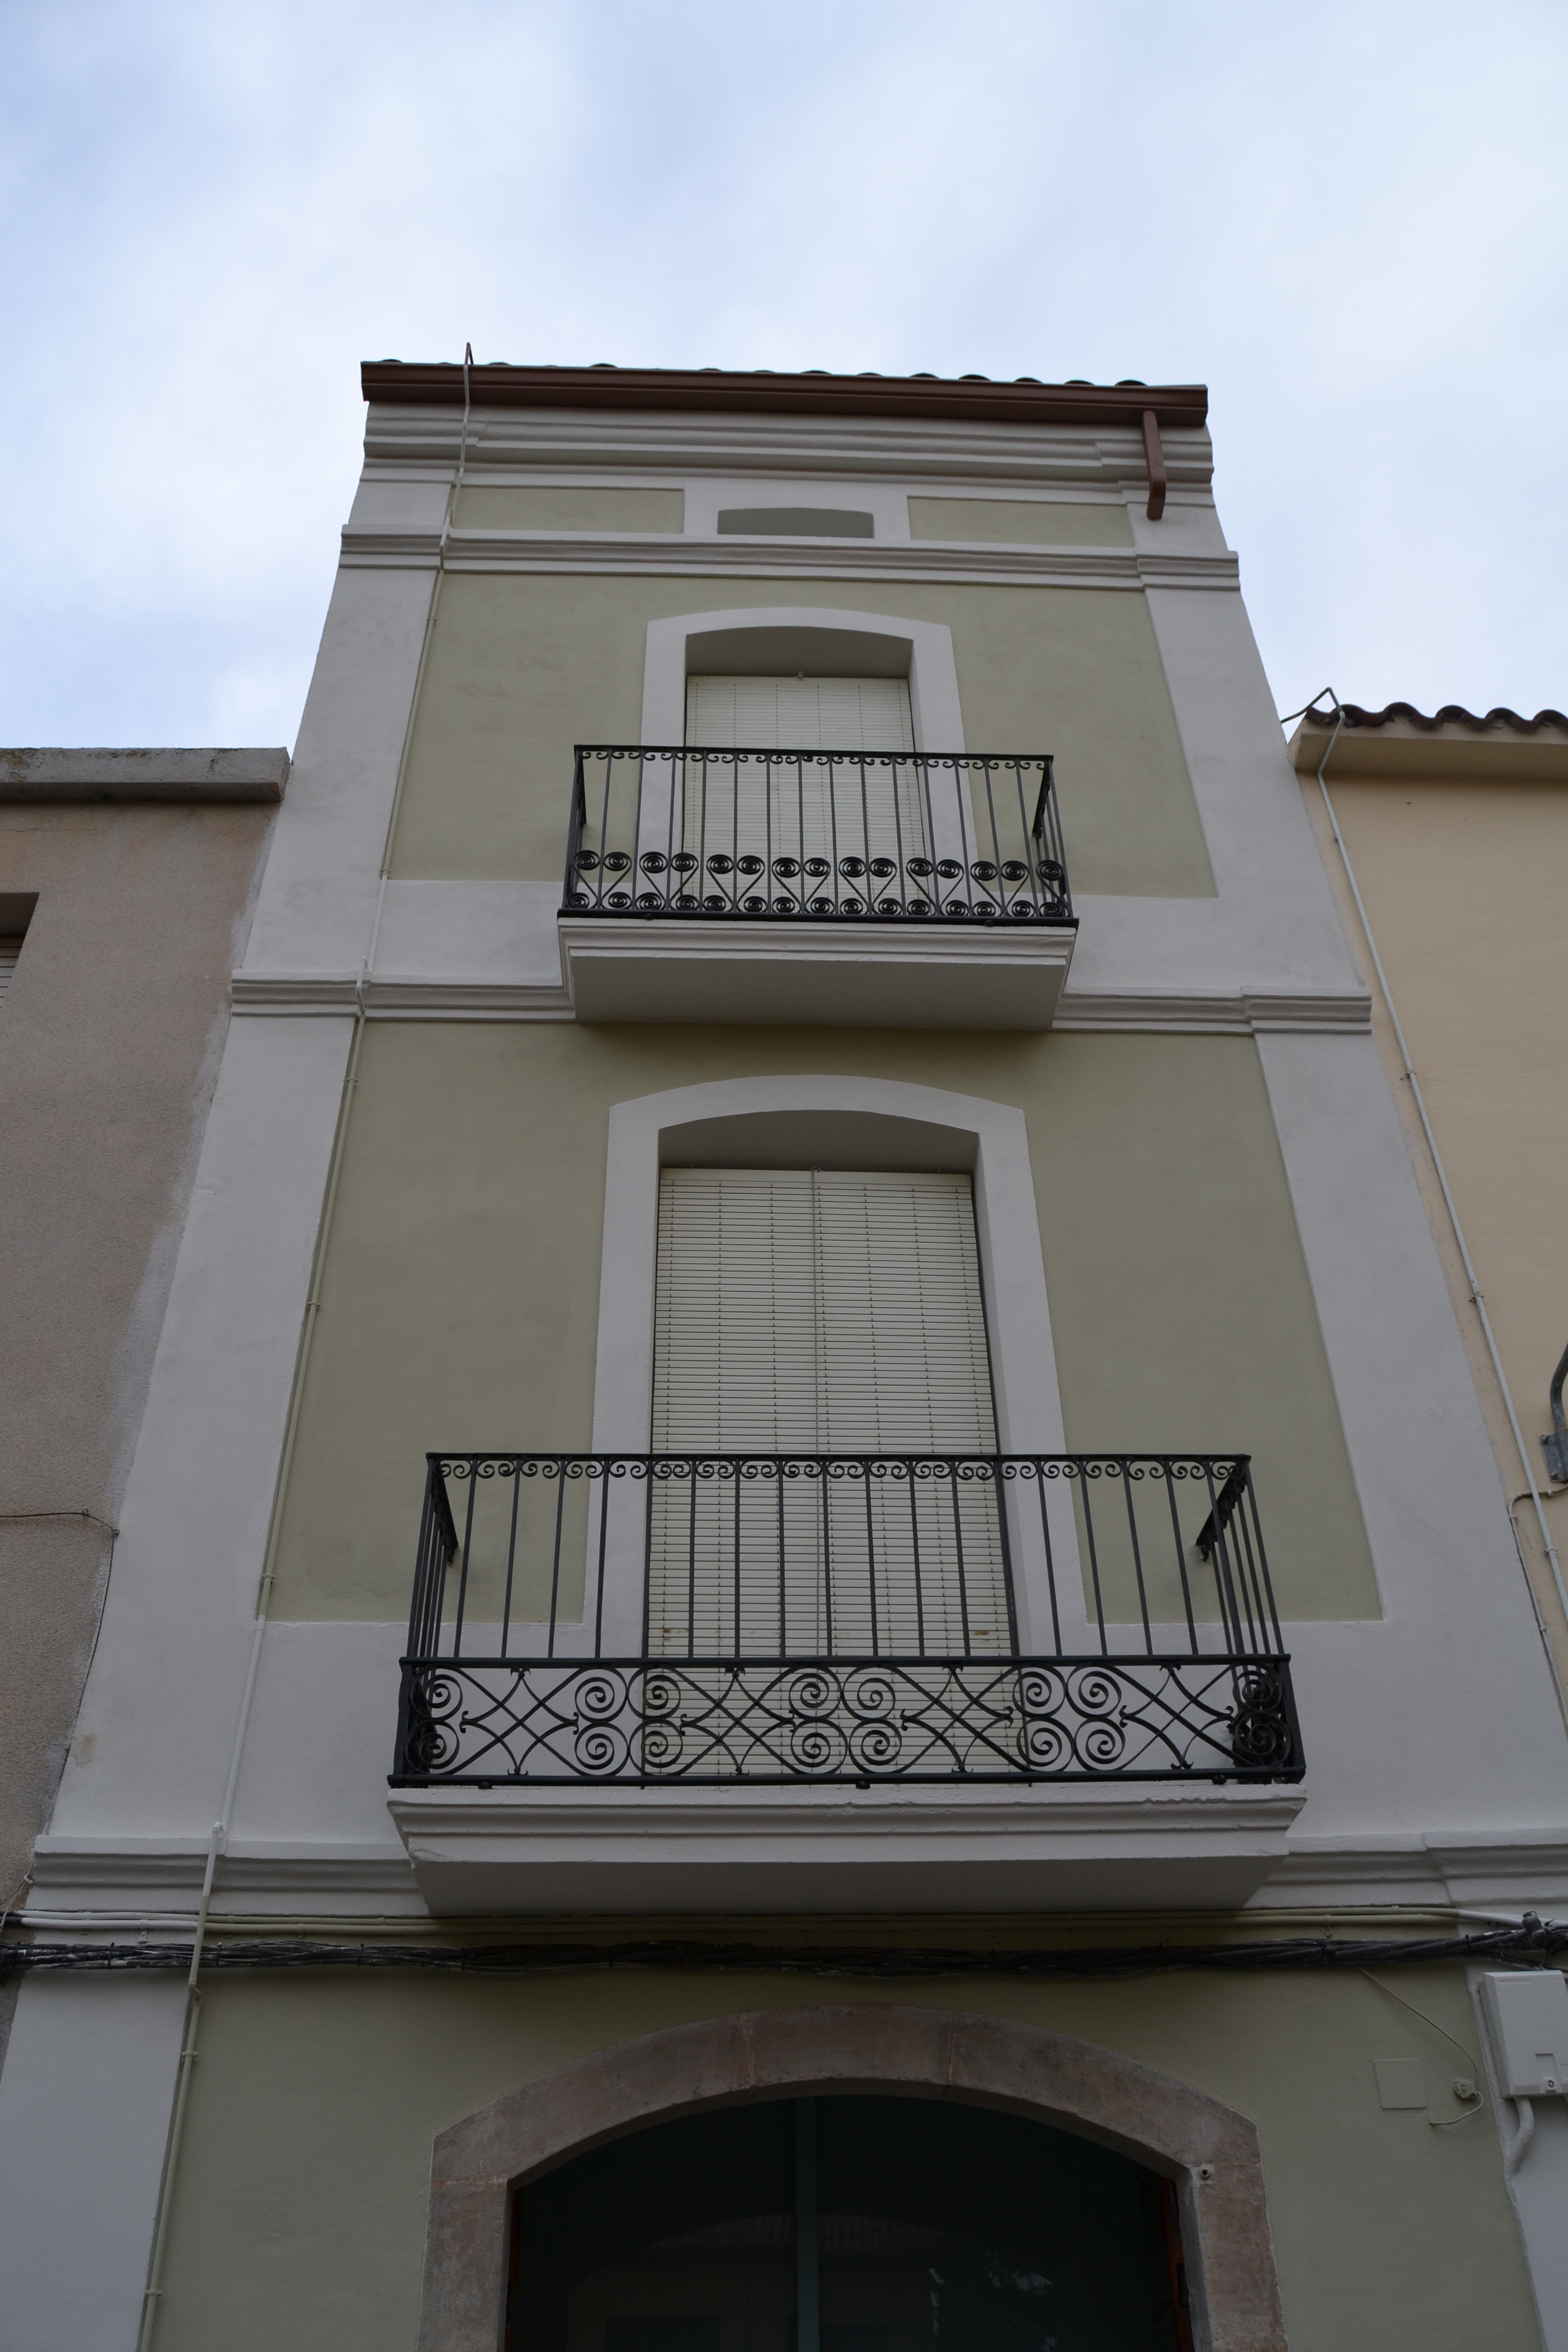 Vivienda unifamiliar fachada – Esparreguera